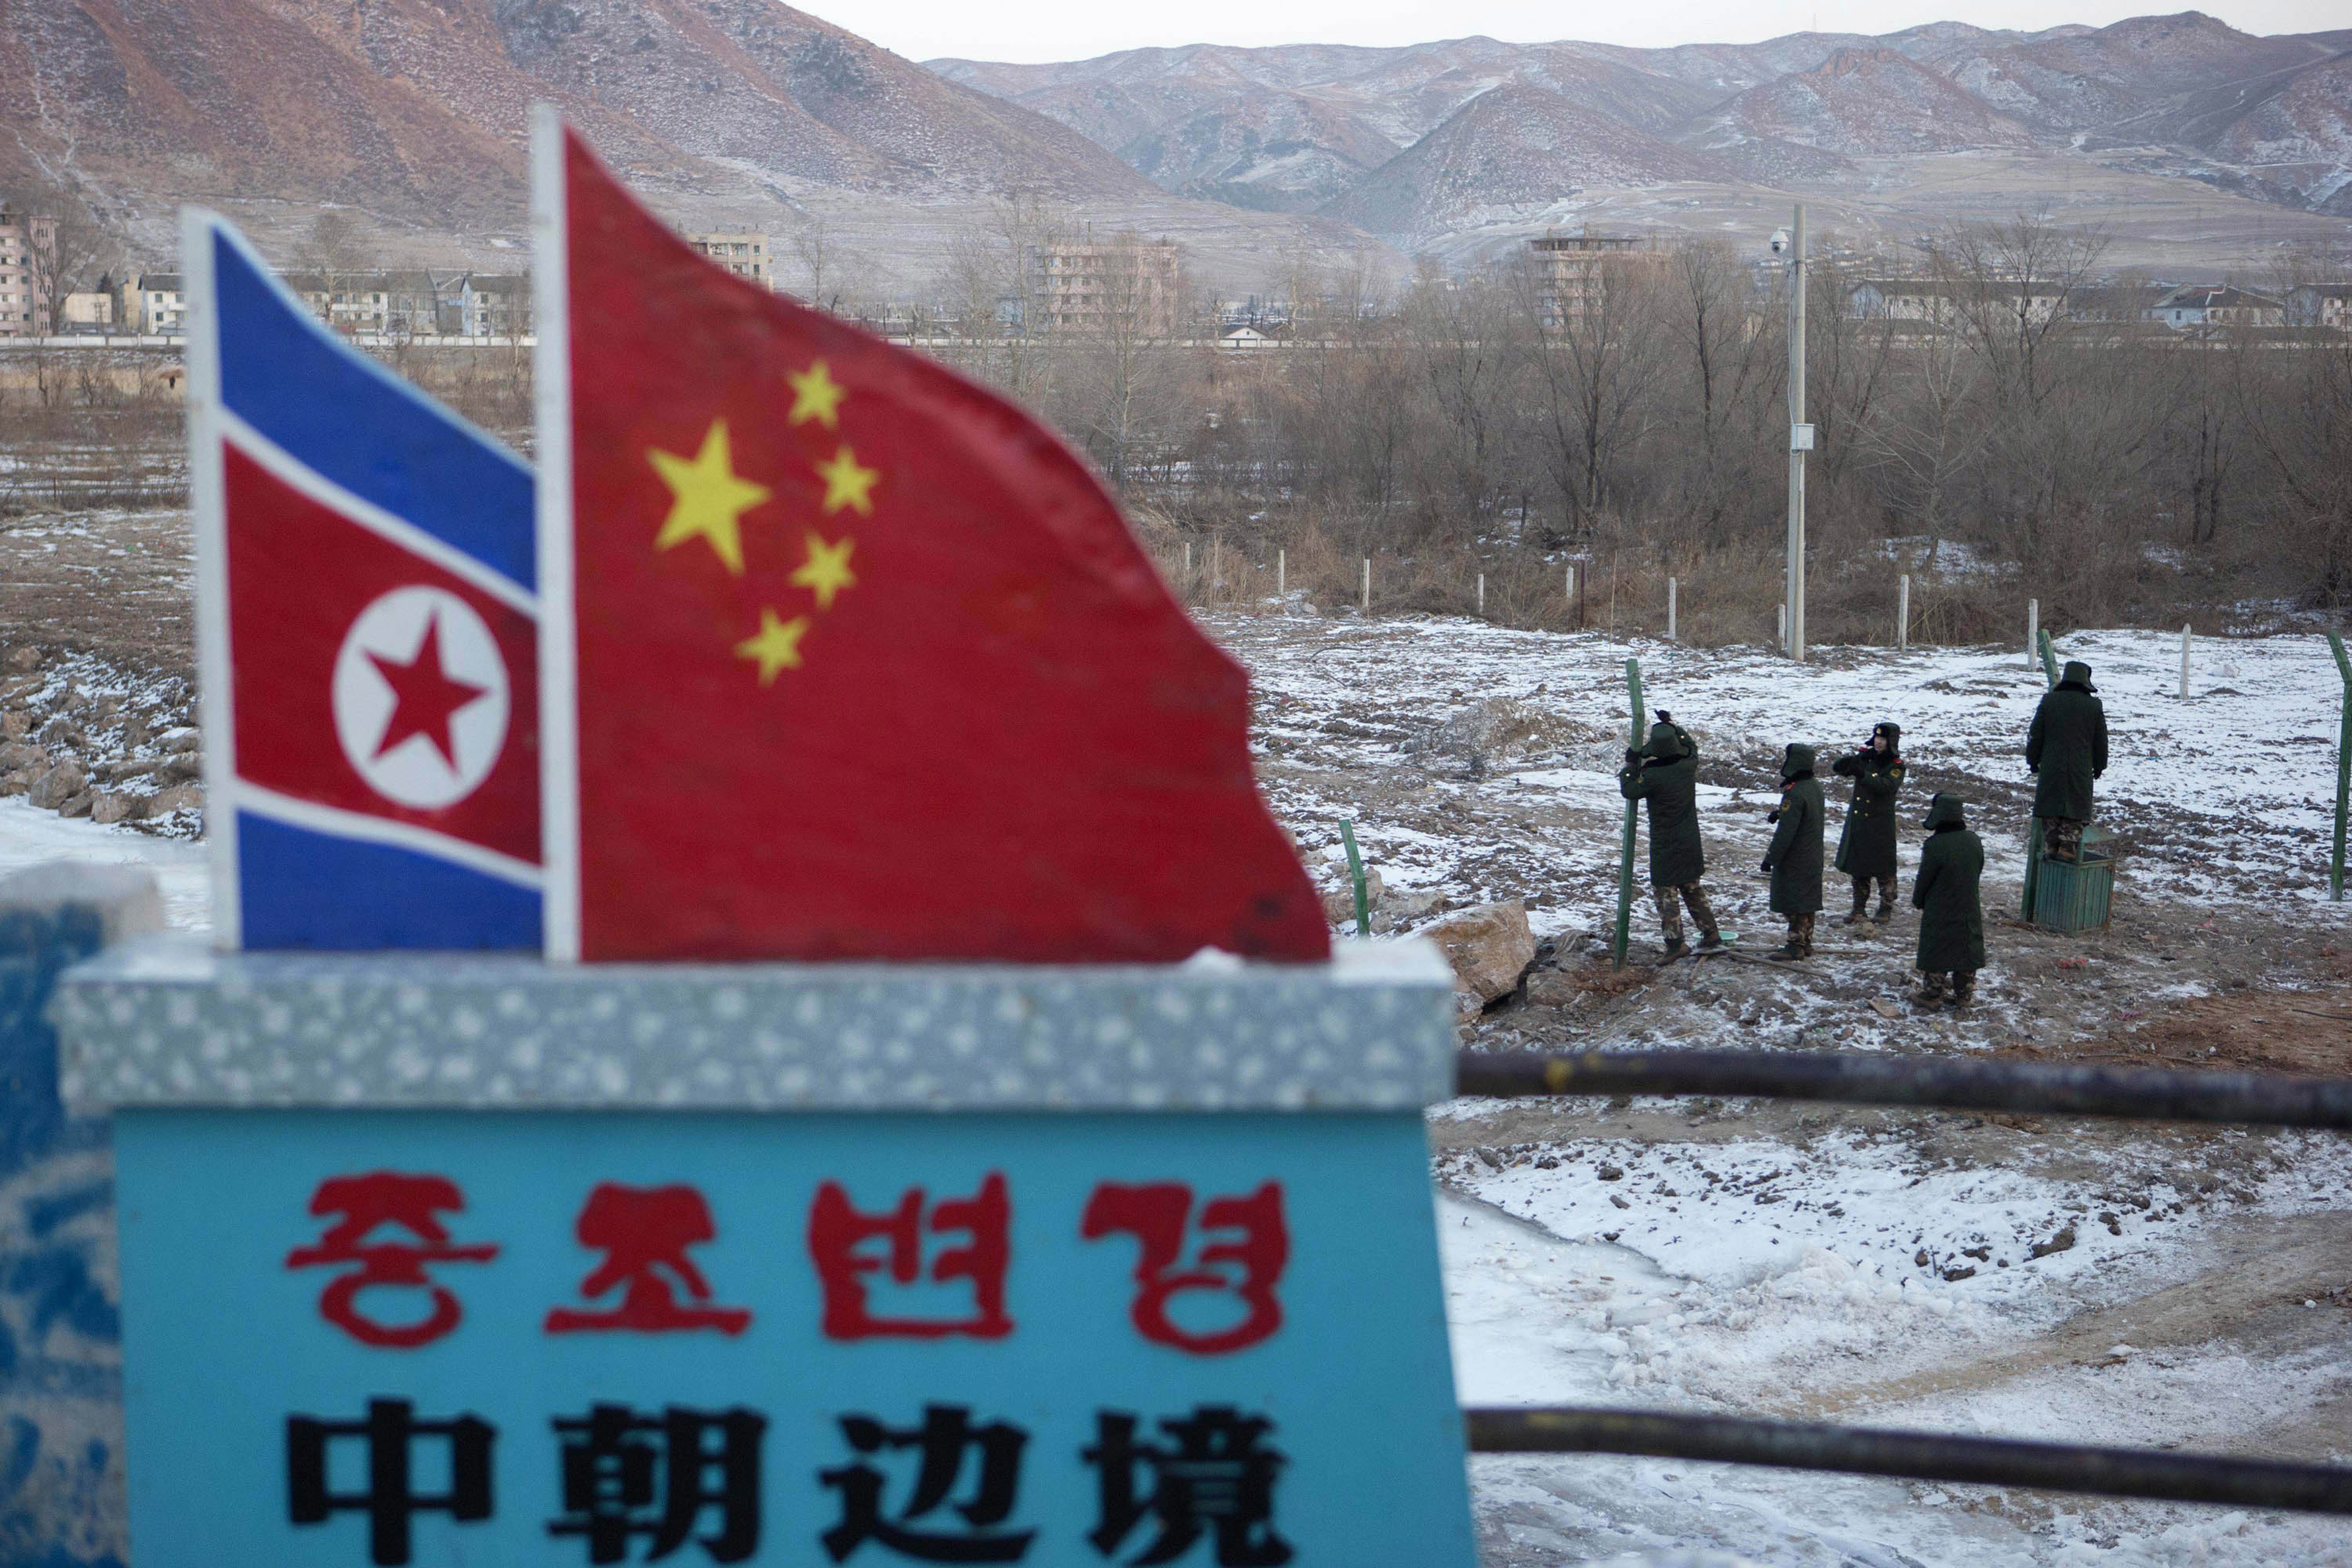 North Korea - China border crossing 